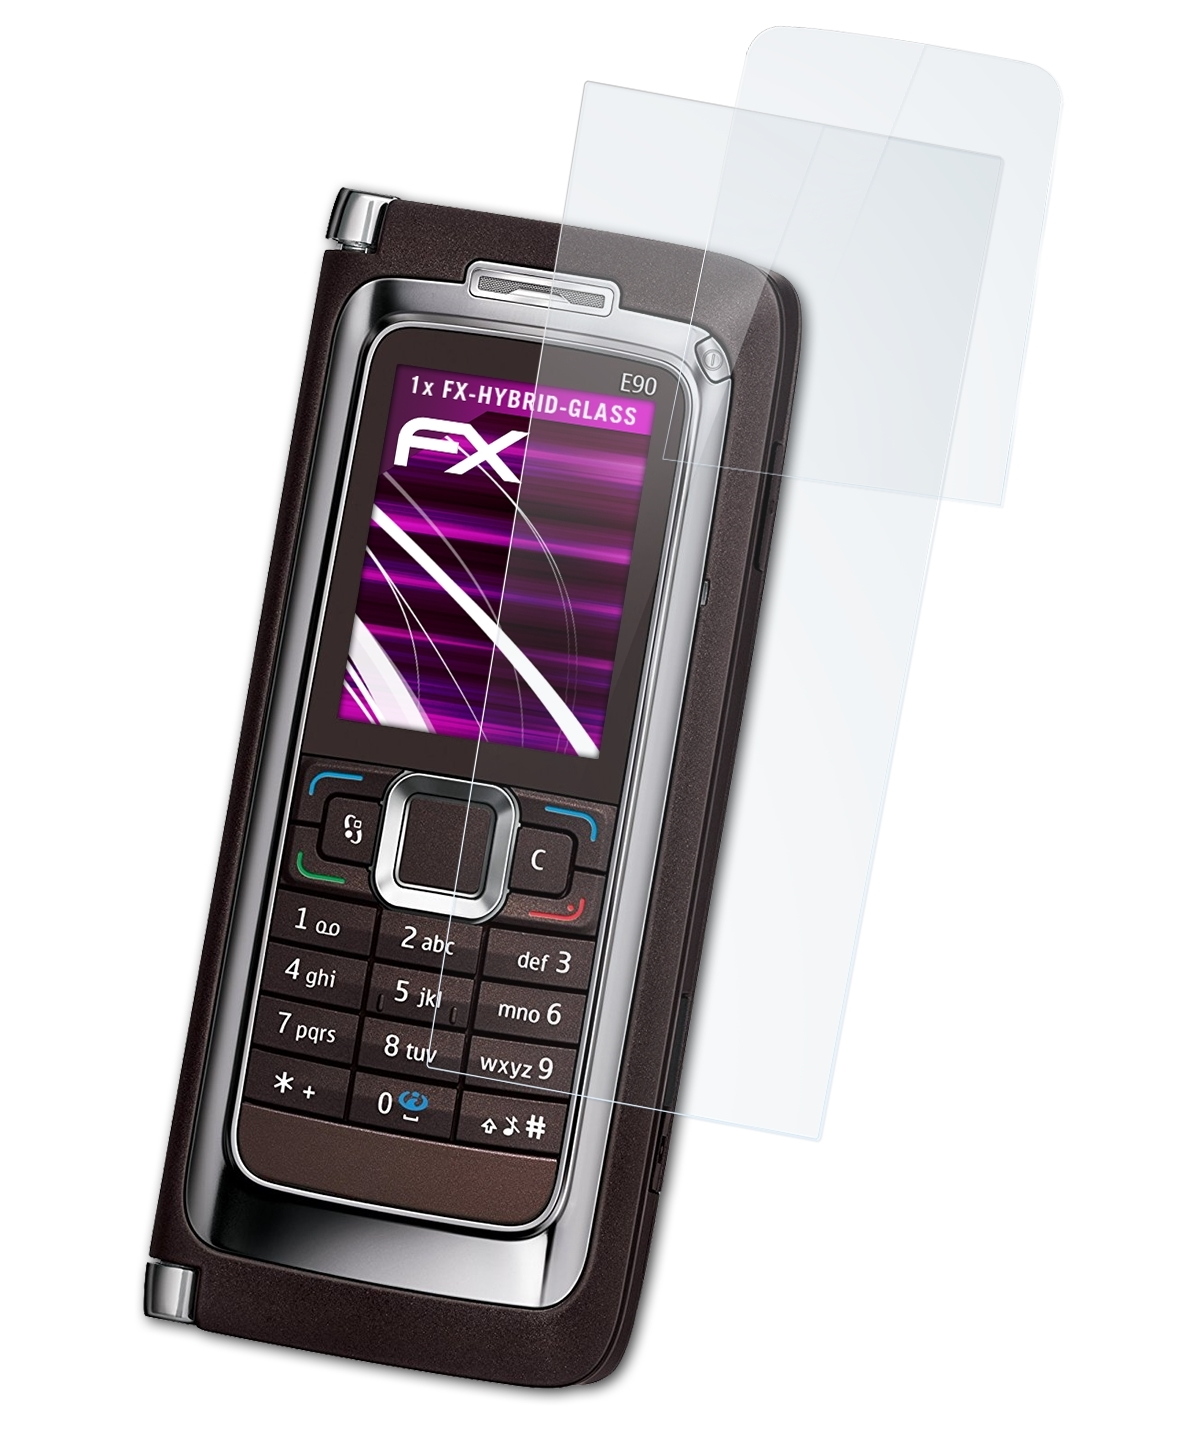 Nokia ATFOLIX FX-Hybrid-Glass E90 Communicator) Schutzglas(für